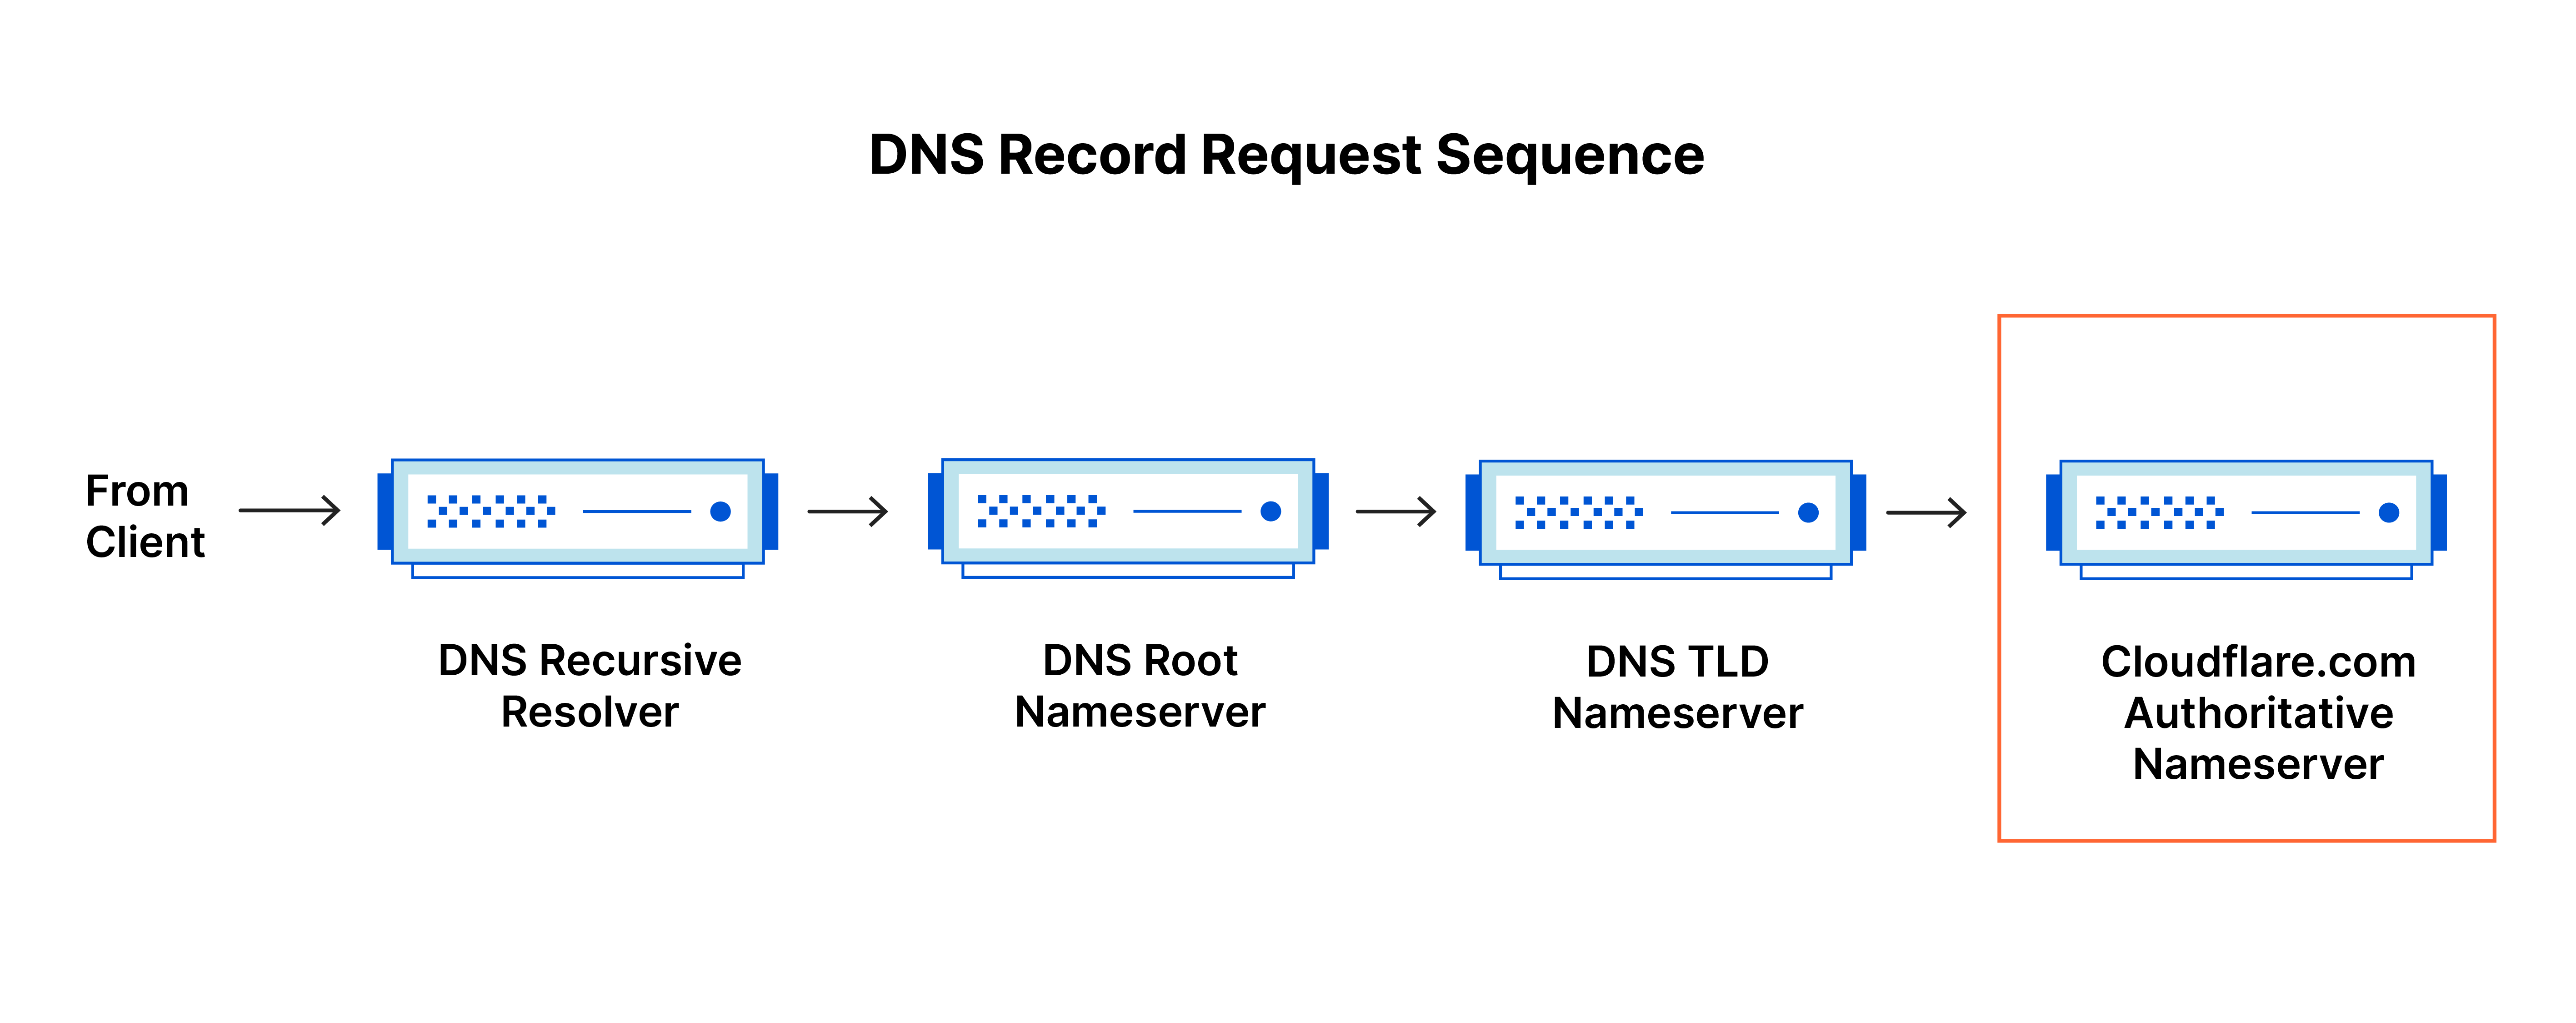 DNS Record Request Sequence - DNS query reaches authoritative nameserver for cloudflare.com